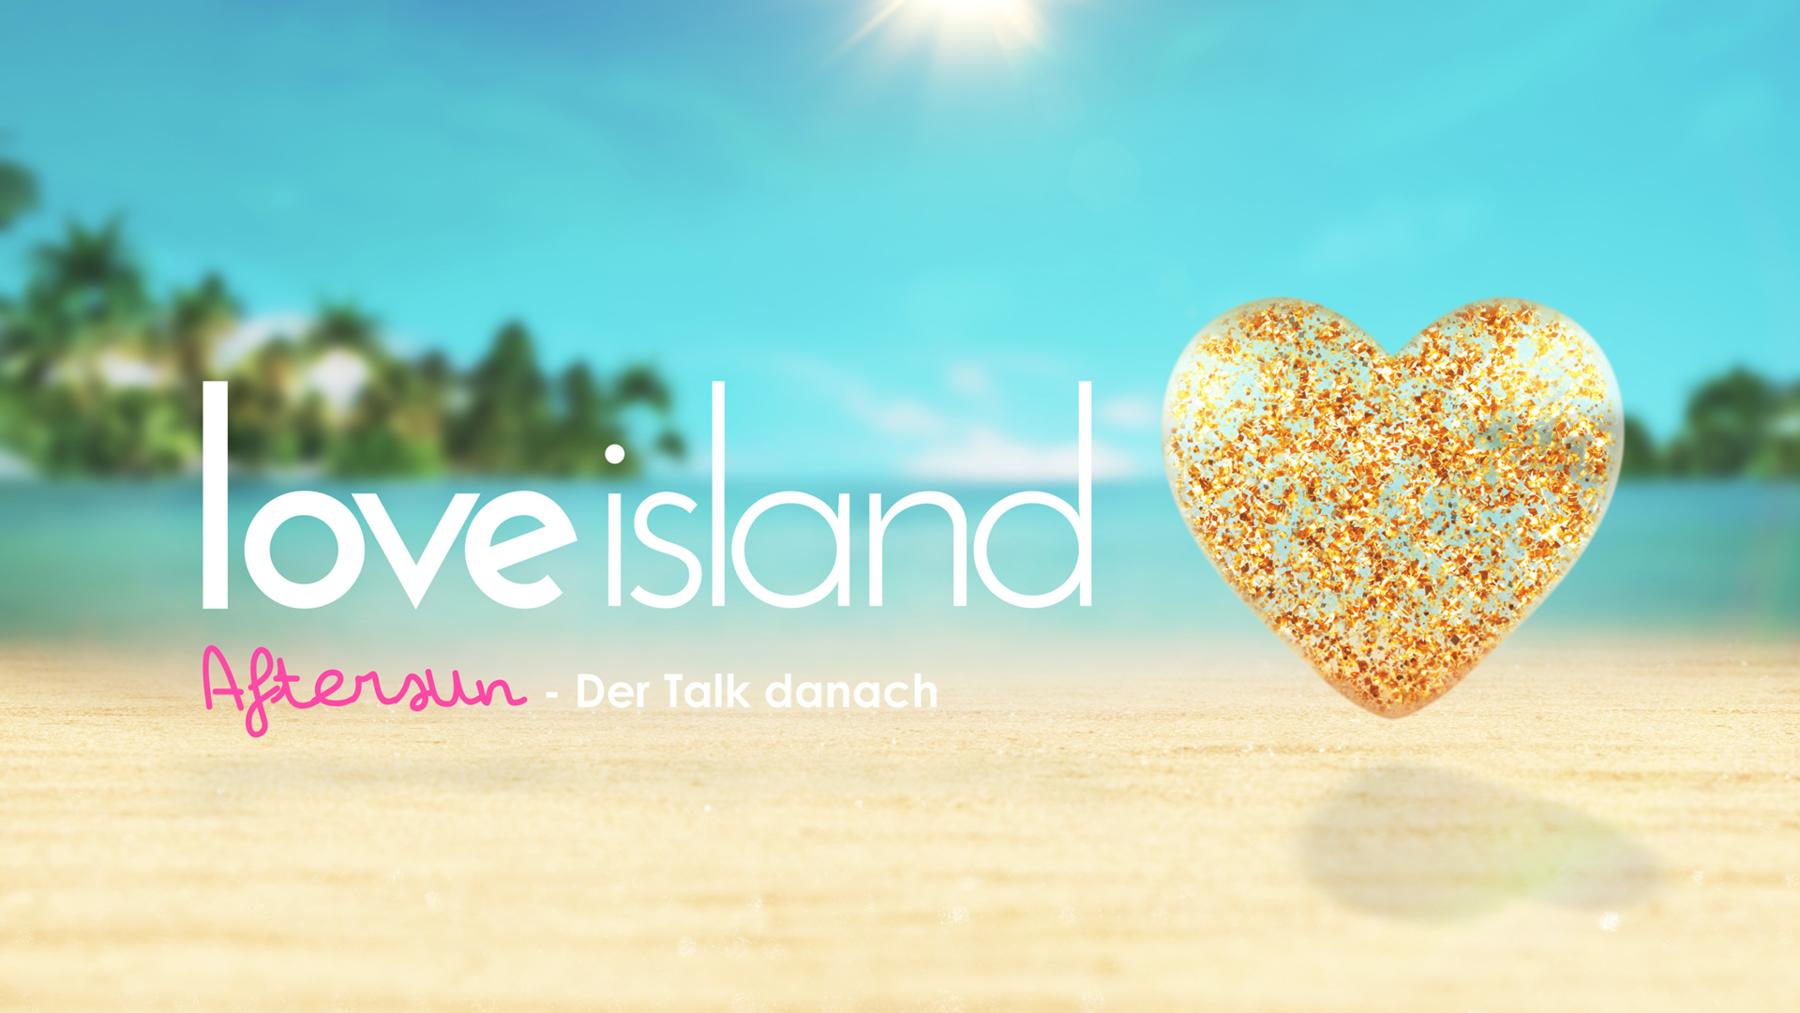 Love Island - Aftersun: Der Talk danach